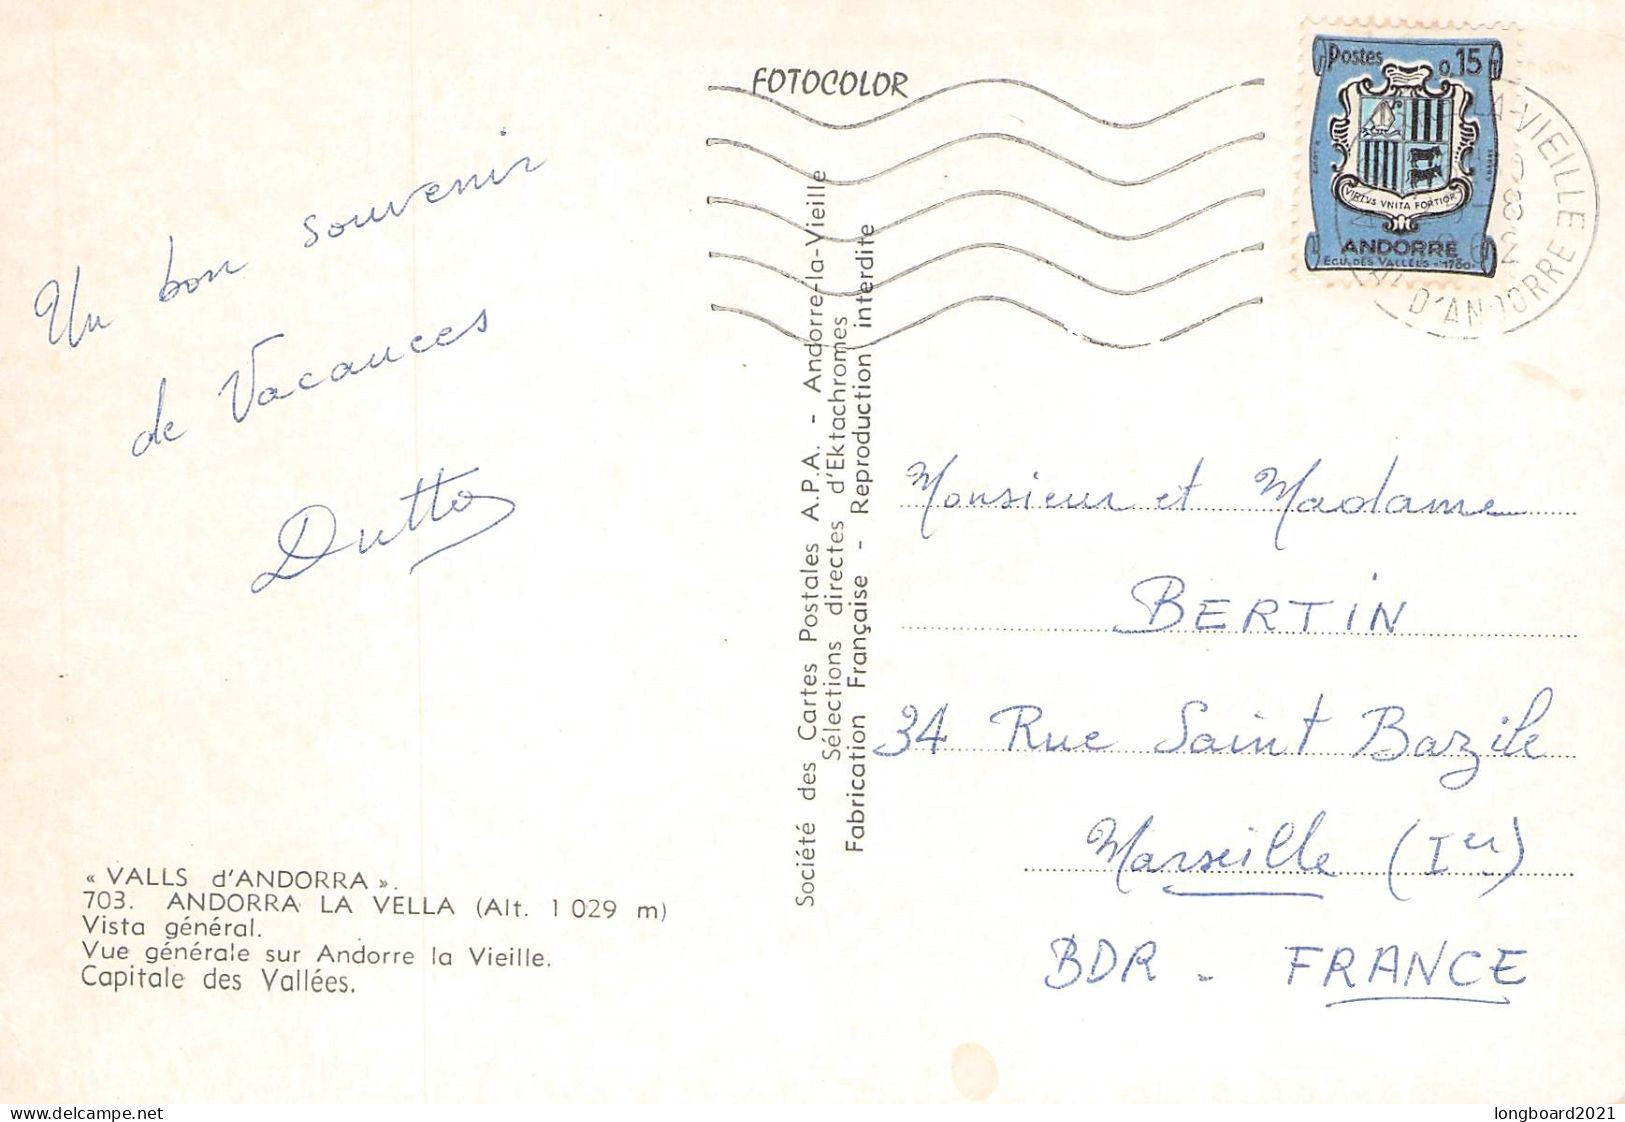 ANDORRA - PICTURE POSTCARD 1962 / 1385 - Briefe U. Dokumente